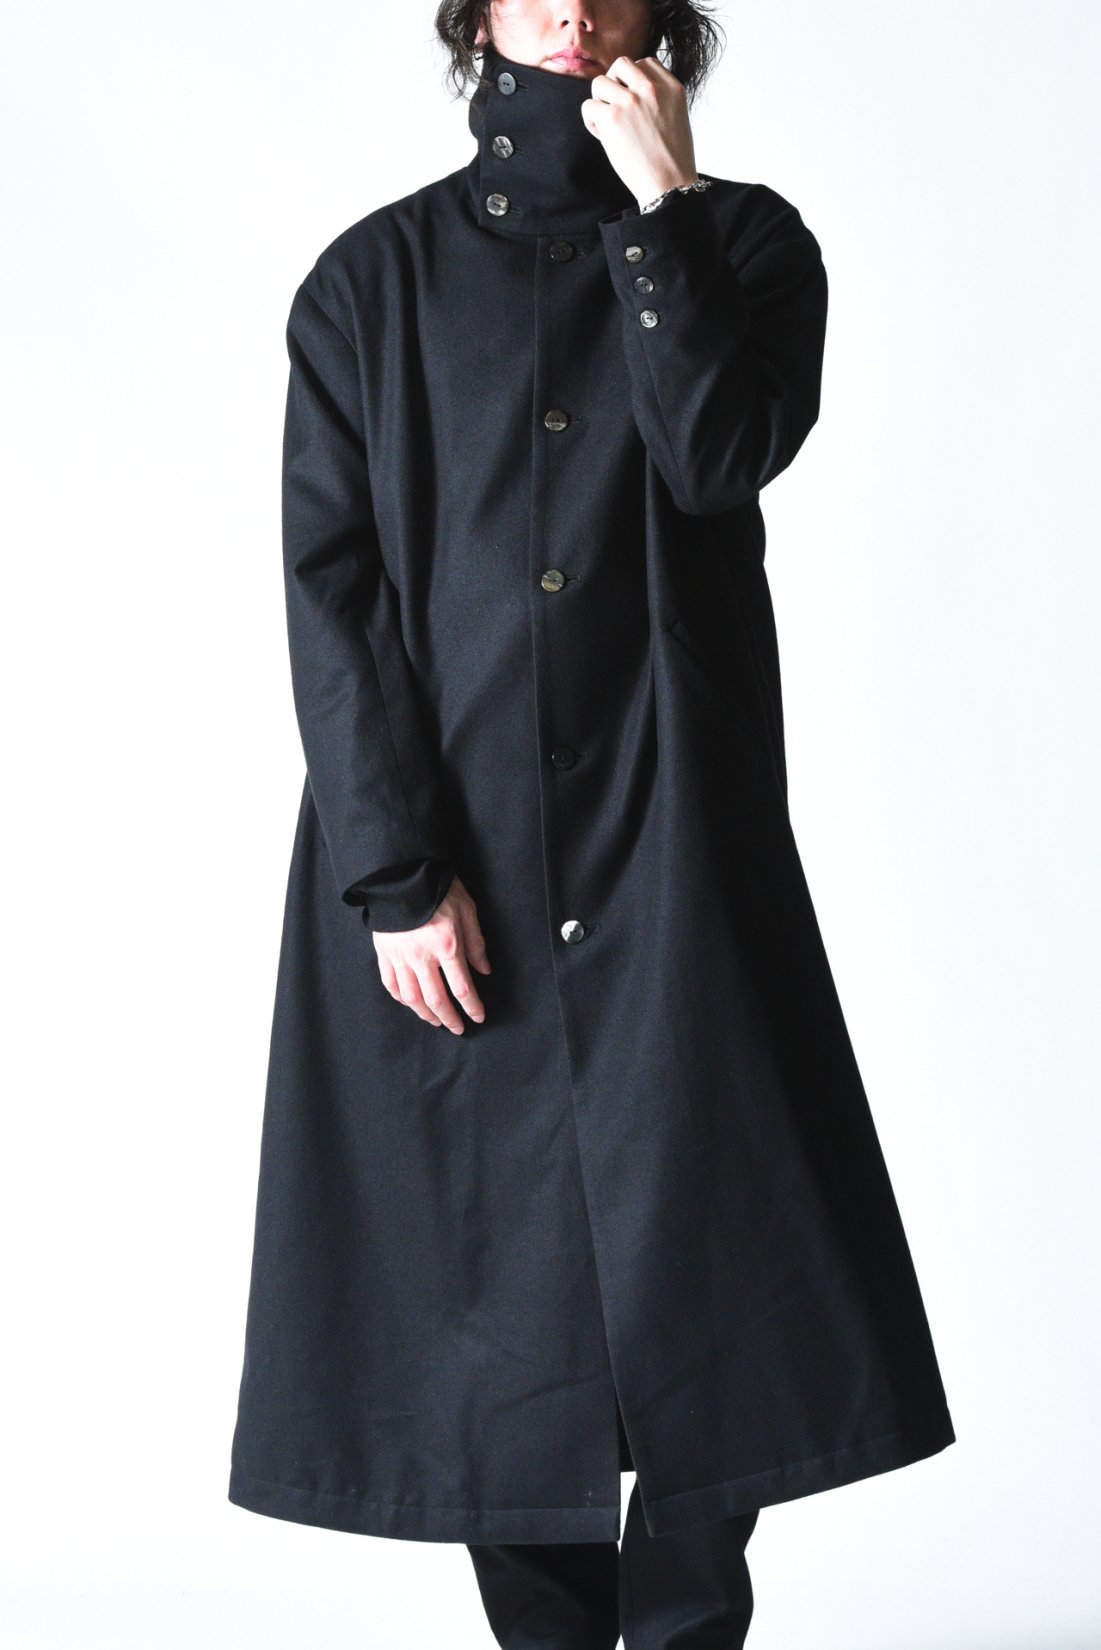 kujaku suzuran coat - BISHOOL,Edwina Horl,My Beautiful Landlet,YANTOR等取扱い  OVIE STUDIO の通販サイト